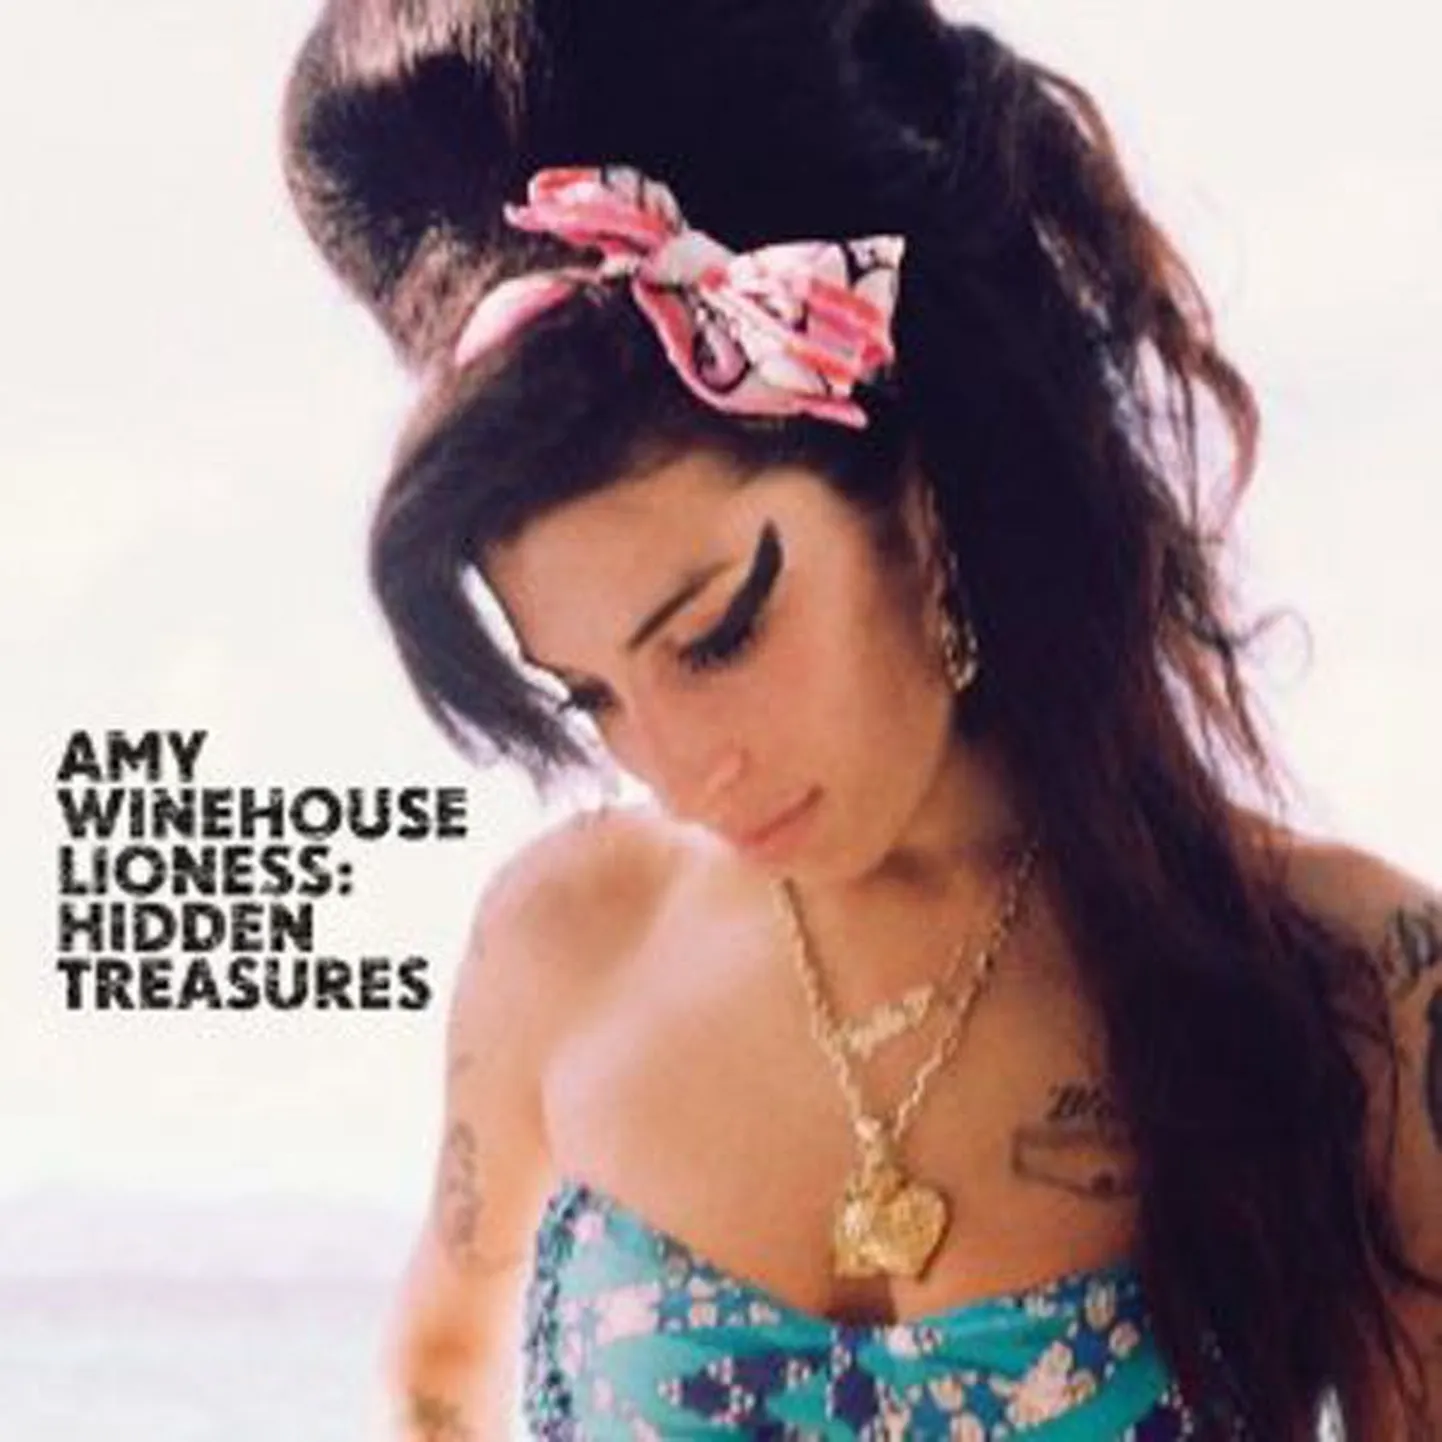 Amy Winehouse
Lioness: Hidden Treasures 
(Island)